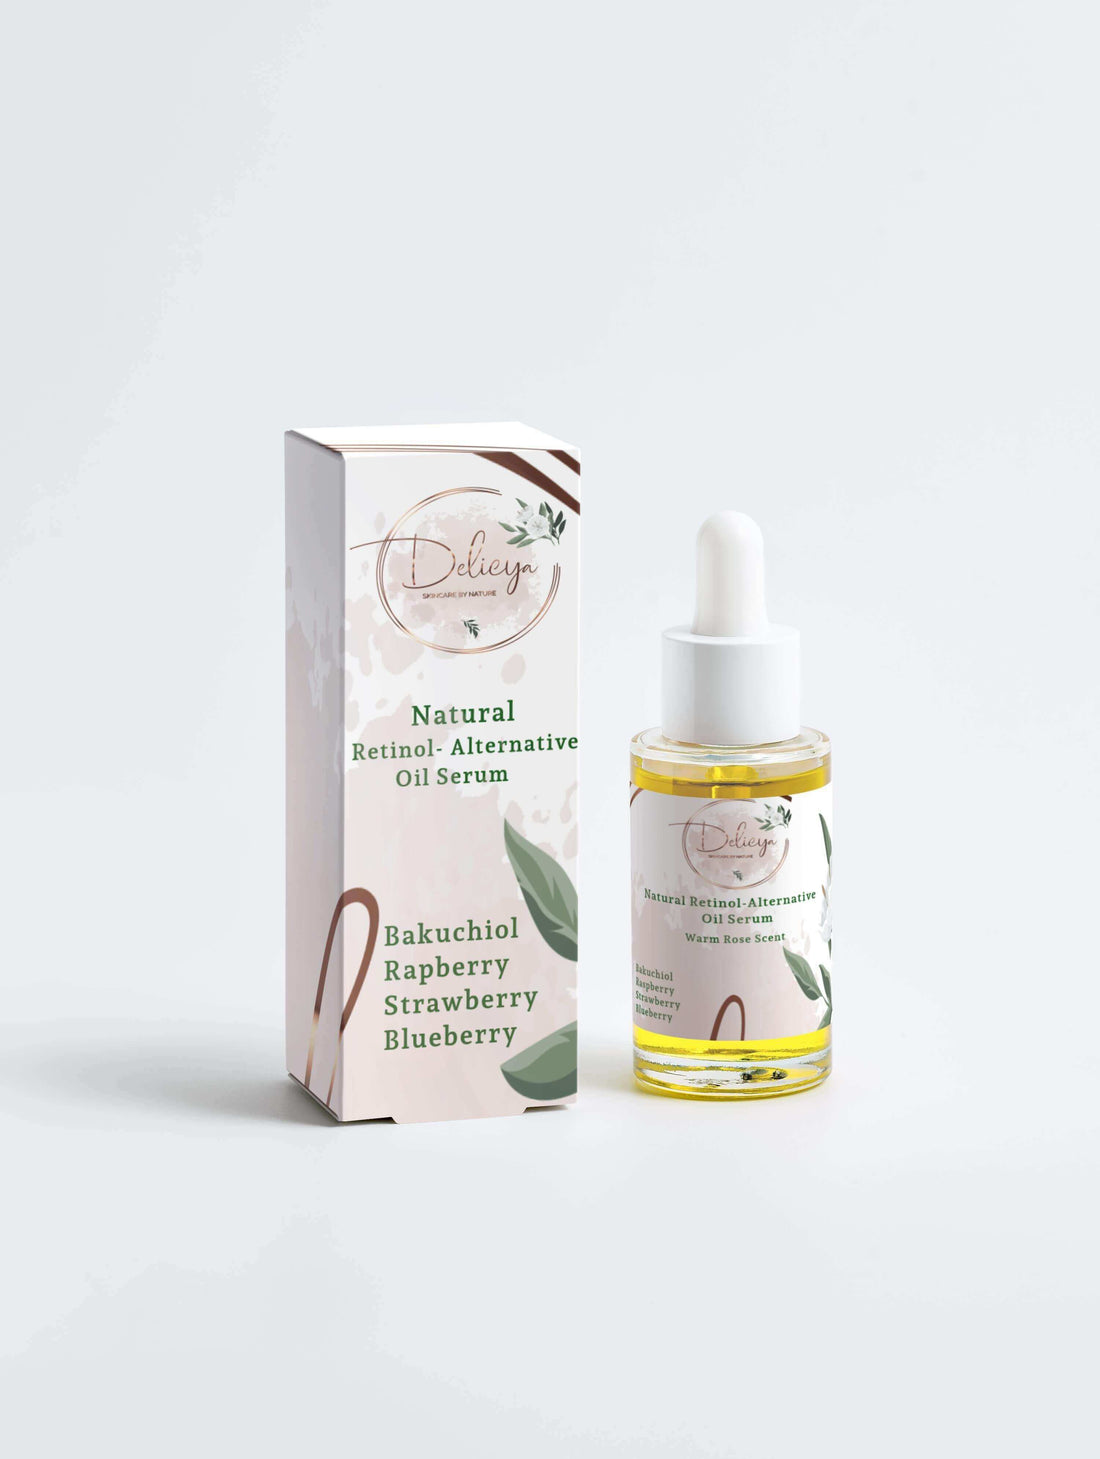 Natural Retinol-Alternative Oil Serum 30ML - Delicya skincare